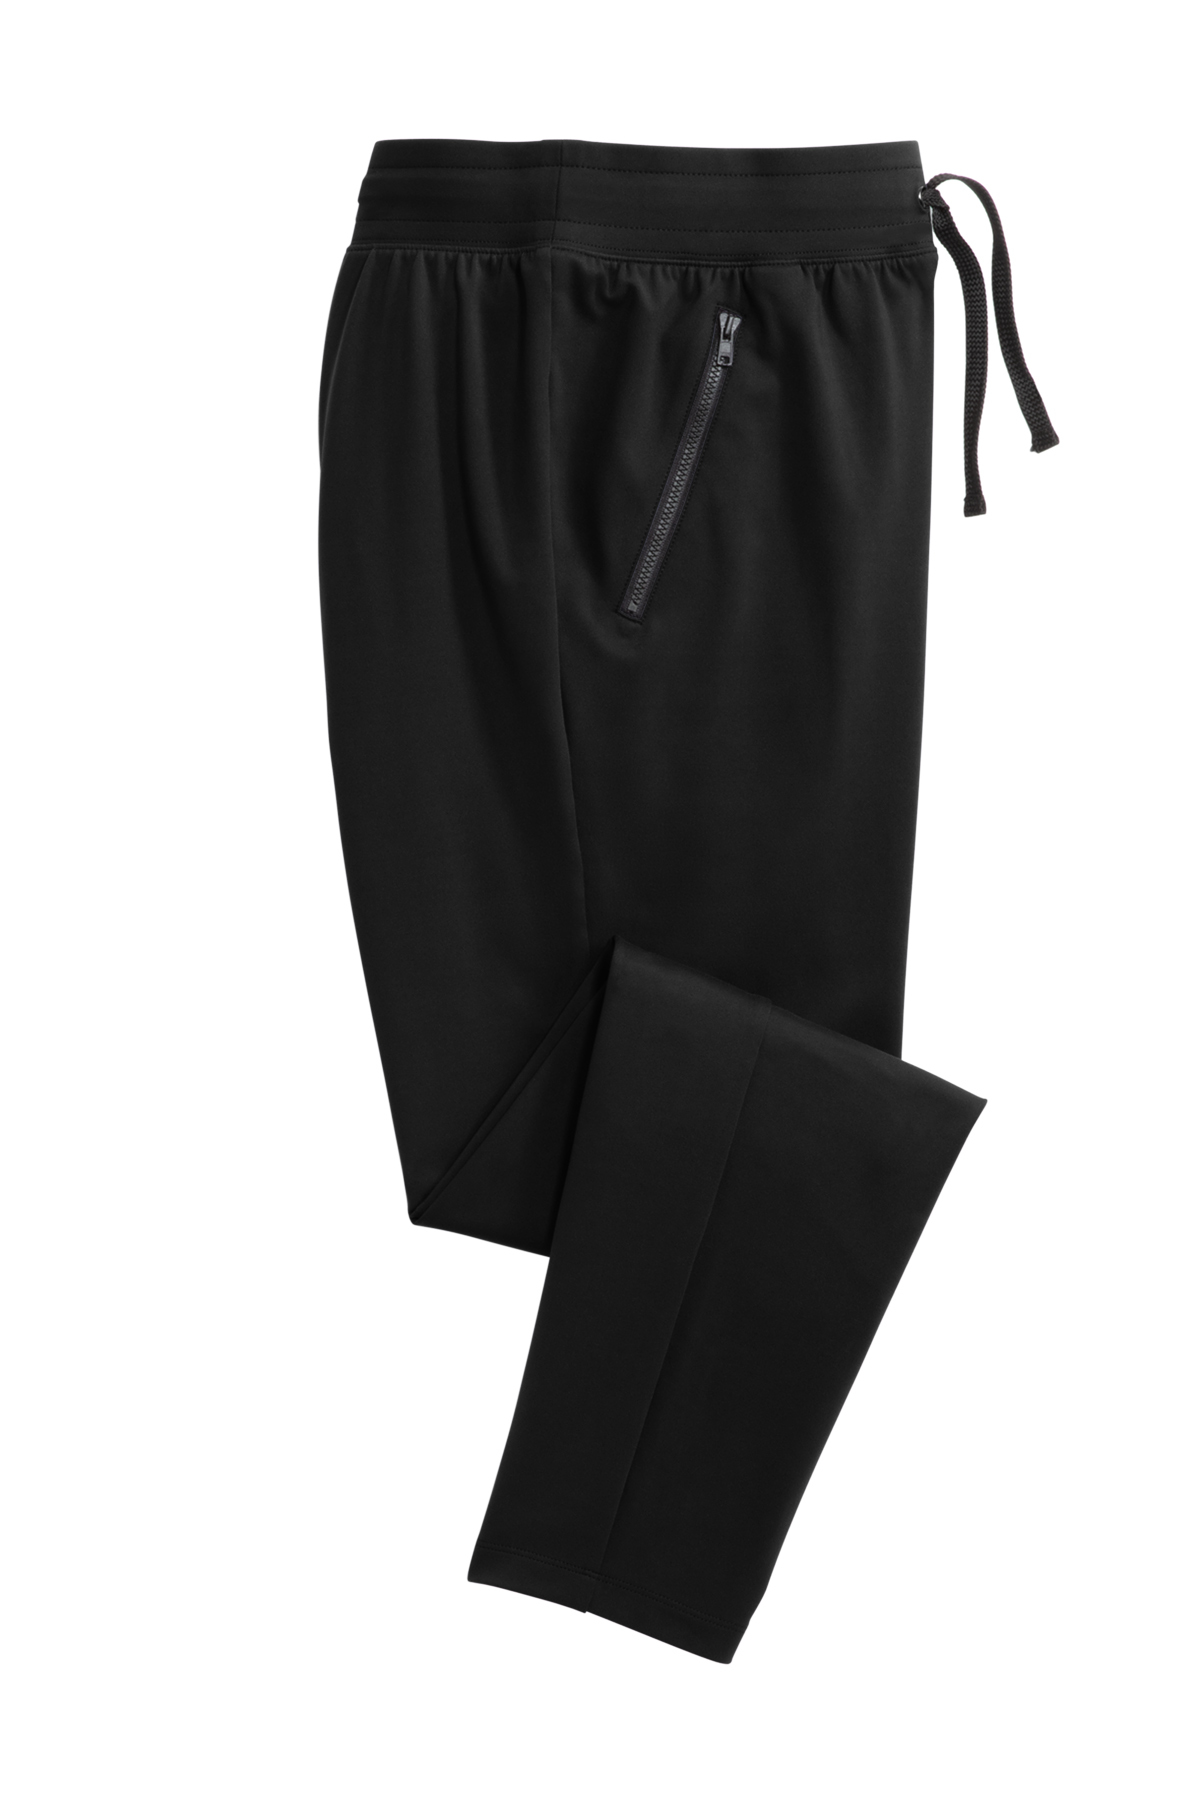 Tek Gear Black Tie Jogger Pants Women's XL 18 20